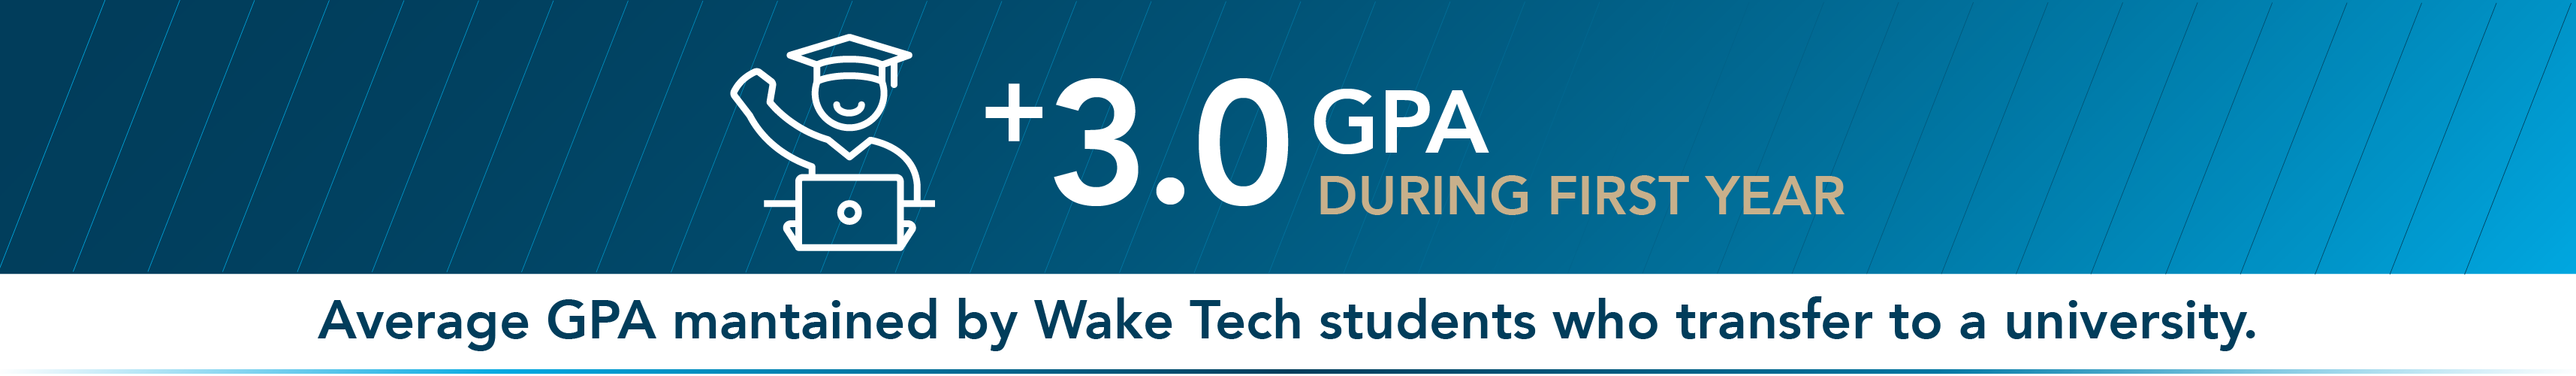 Wake Tech 3.0 GPA during first year